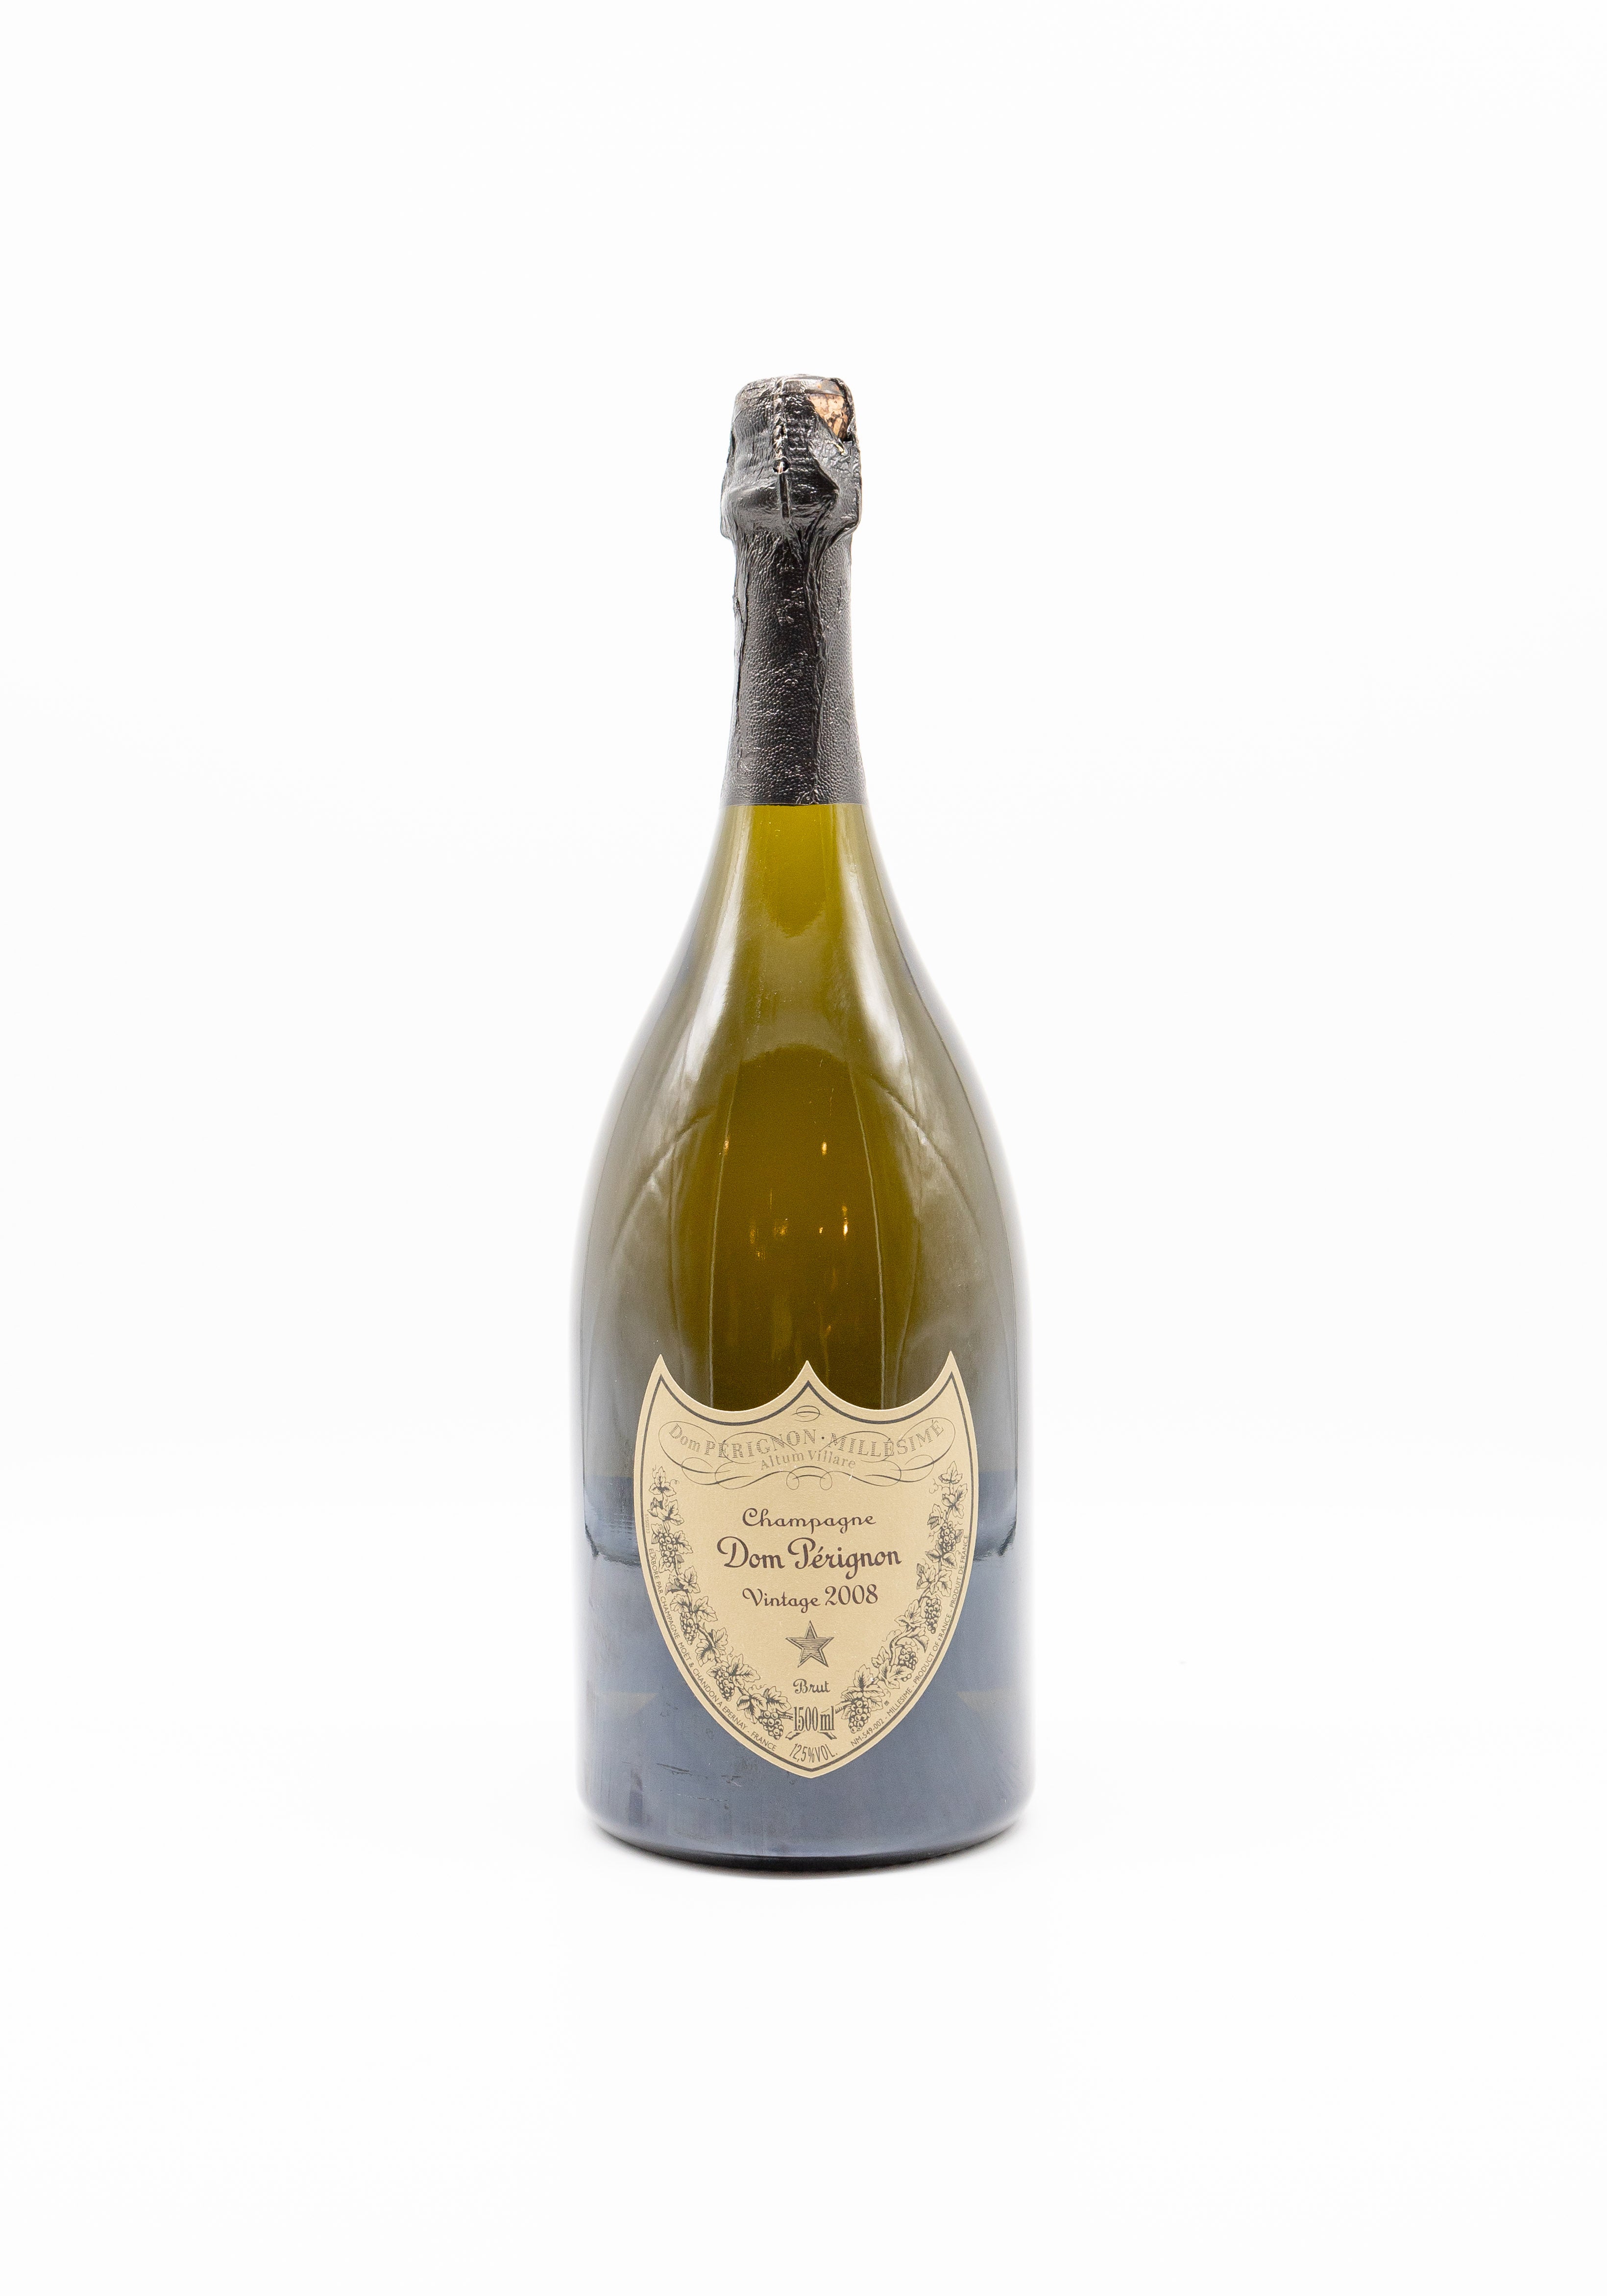 Champagne+Dom+Perignon+Vintage+2010+Grand+Cru+Magnum+France